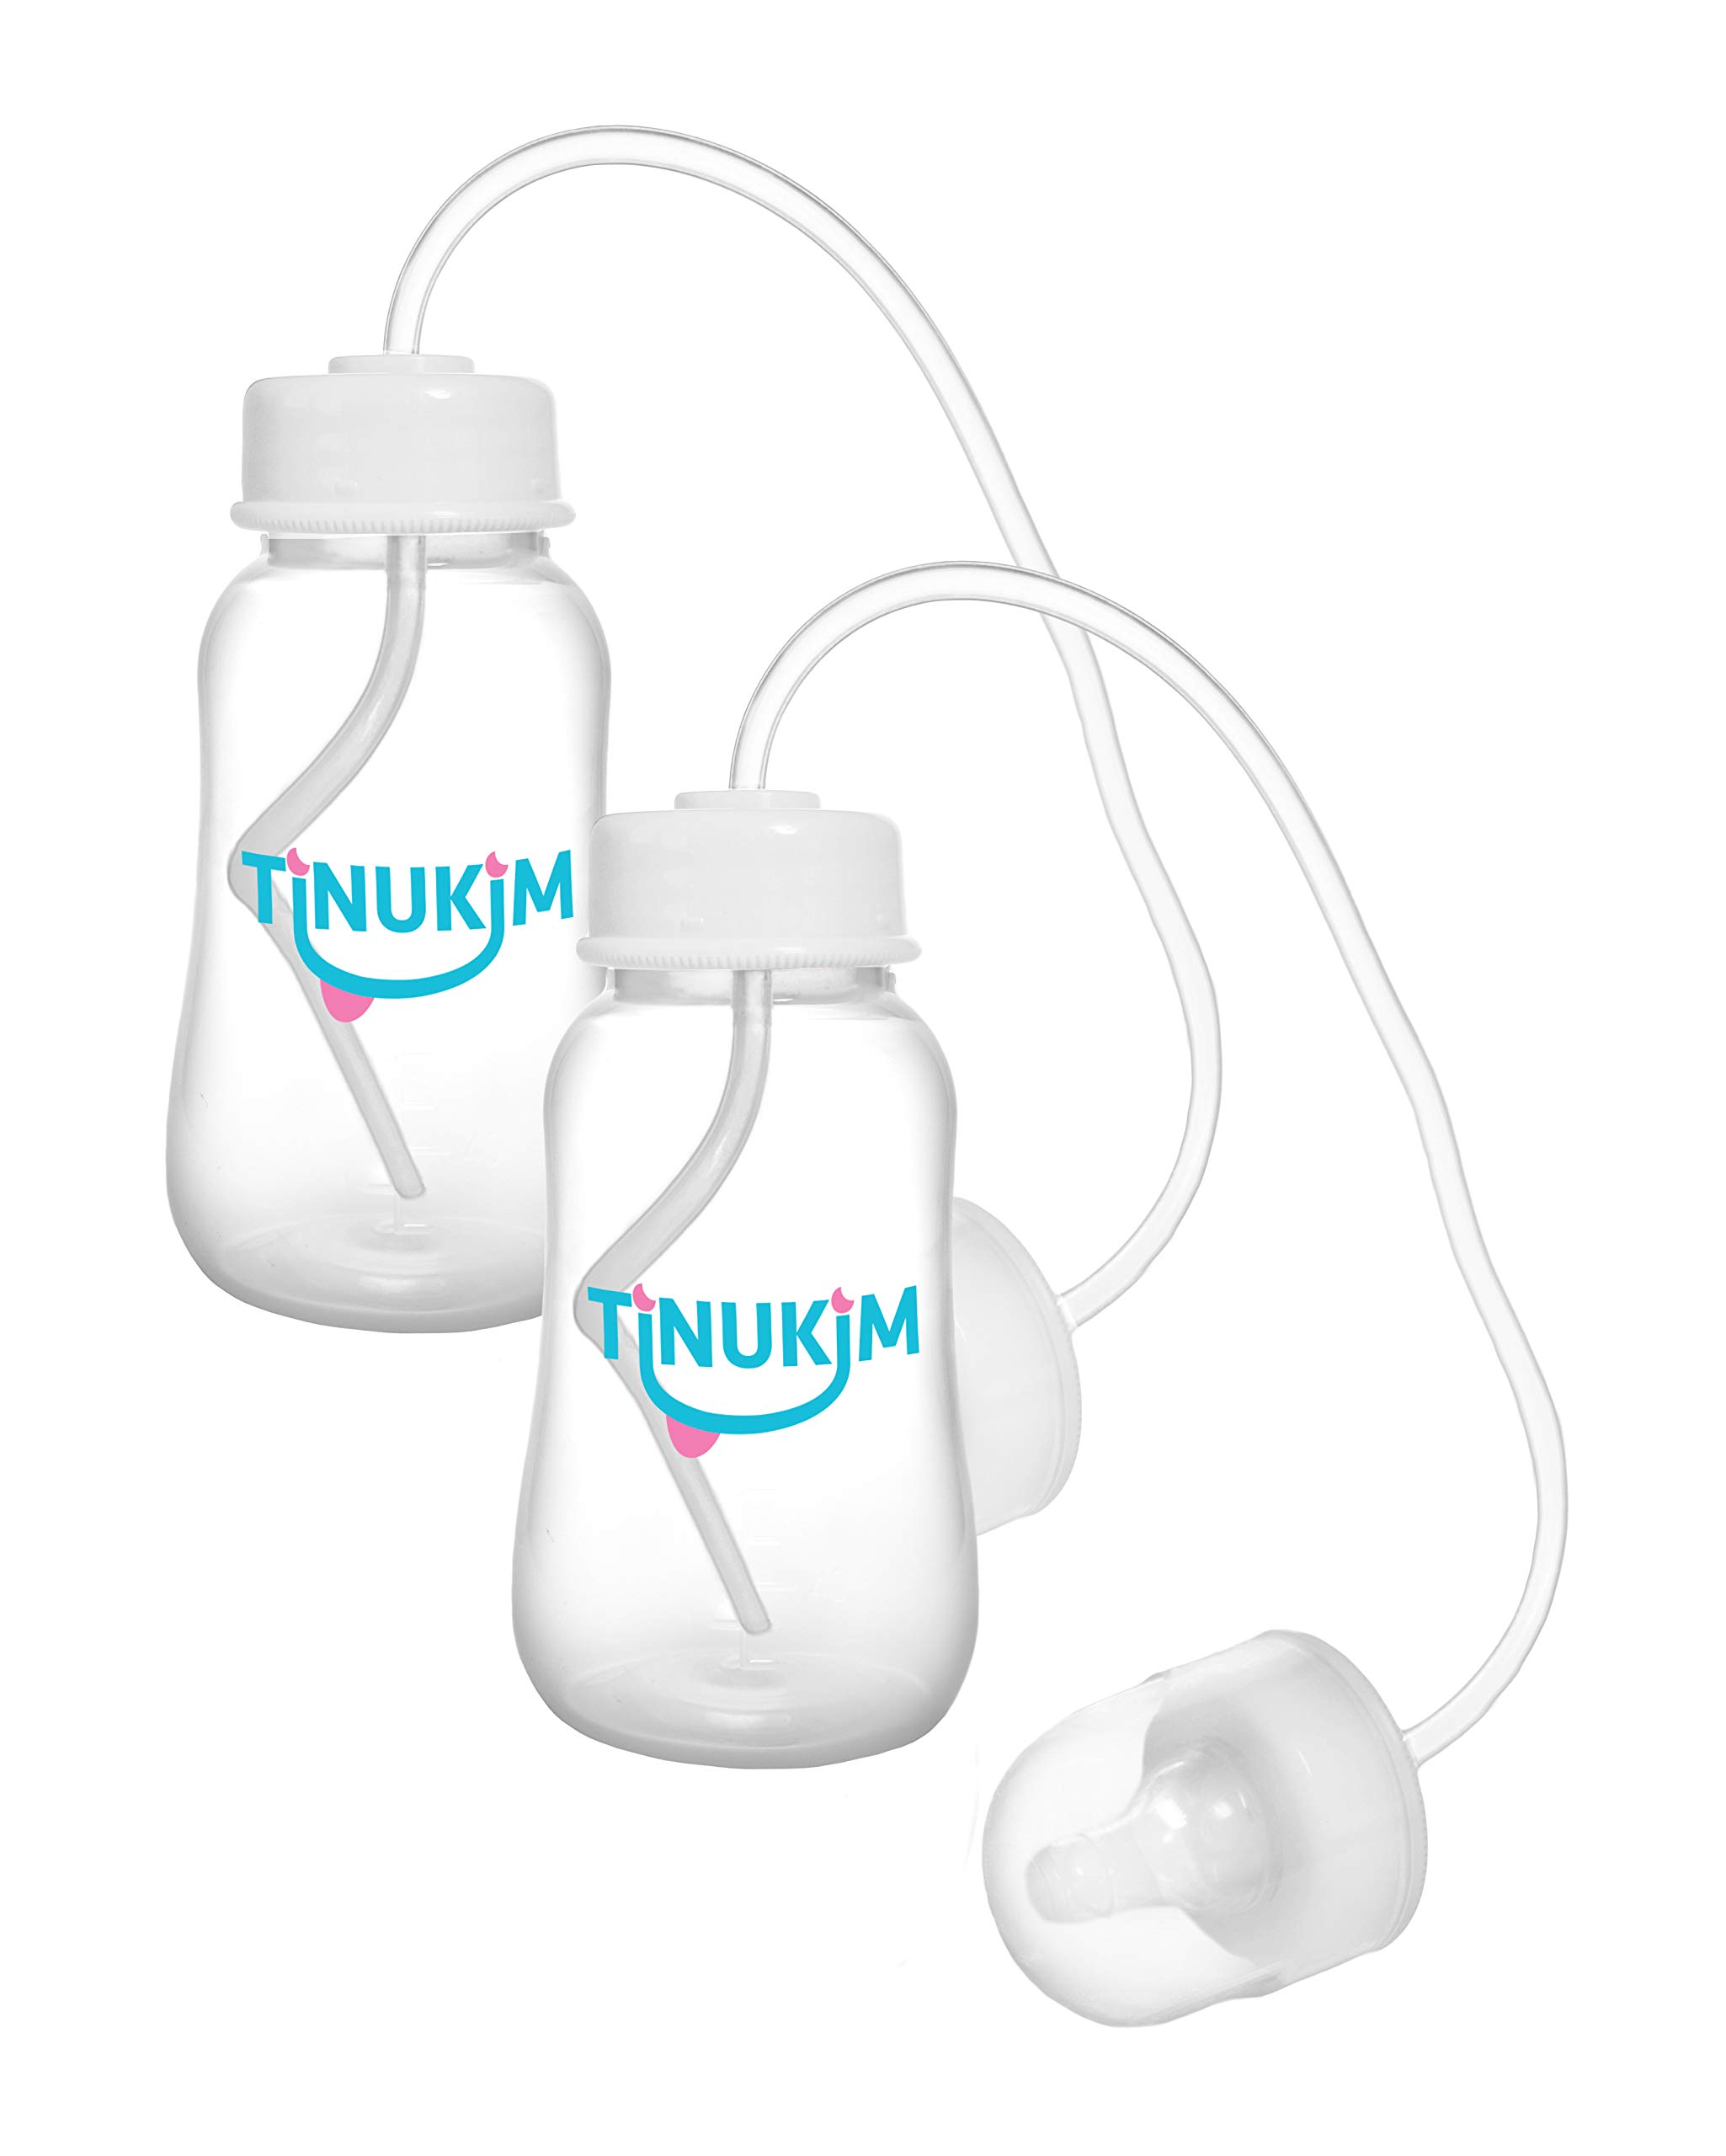 Tinukim iFeed 4 Ounce Self Feeding Baby Bottle with Tube - Handless Anti-Colic Nursing System, White - 2-Pack